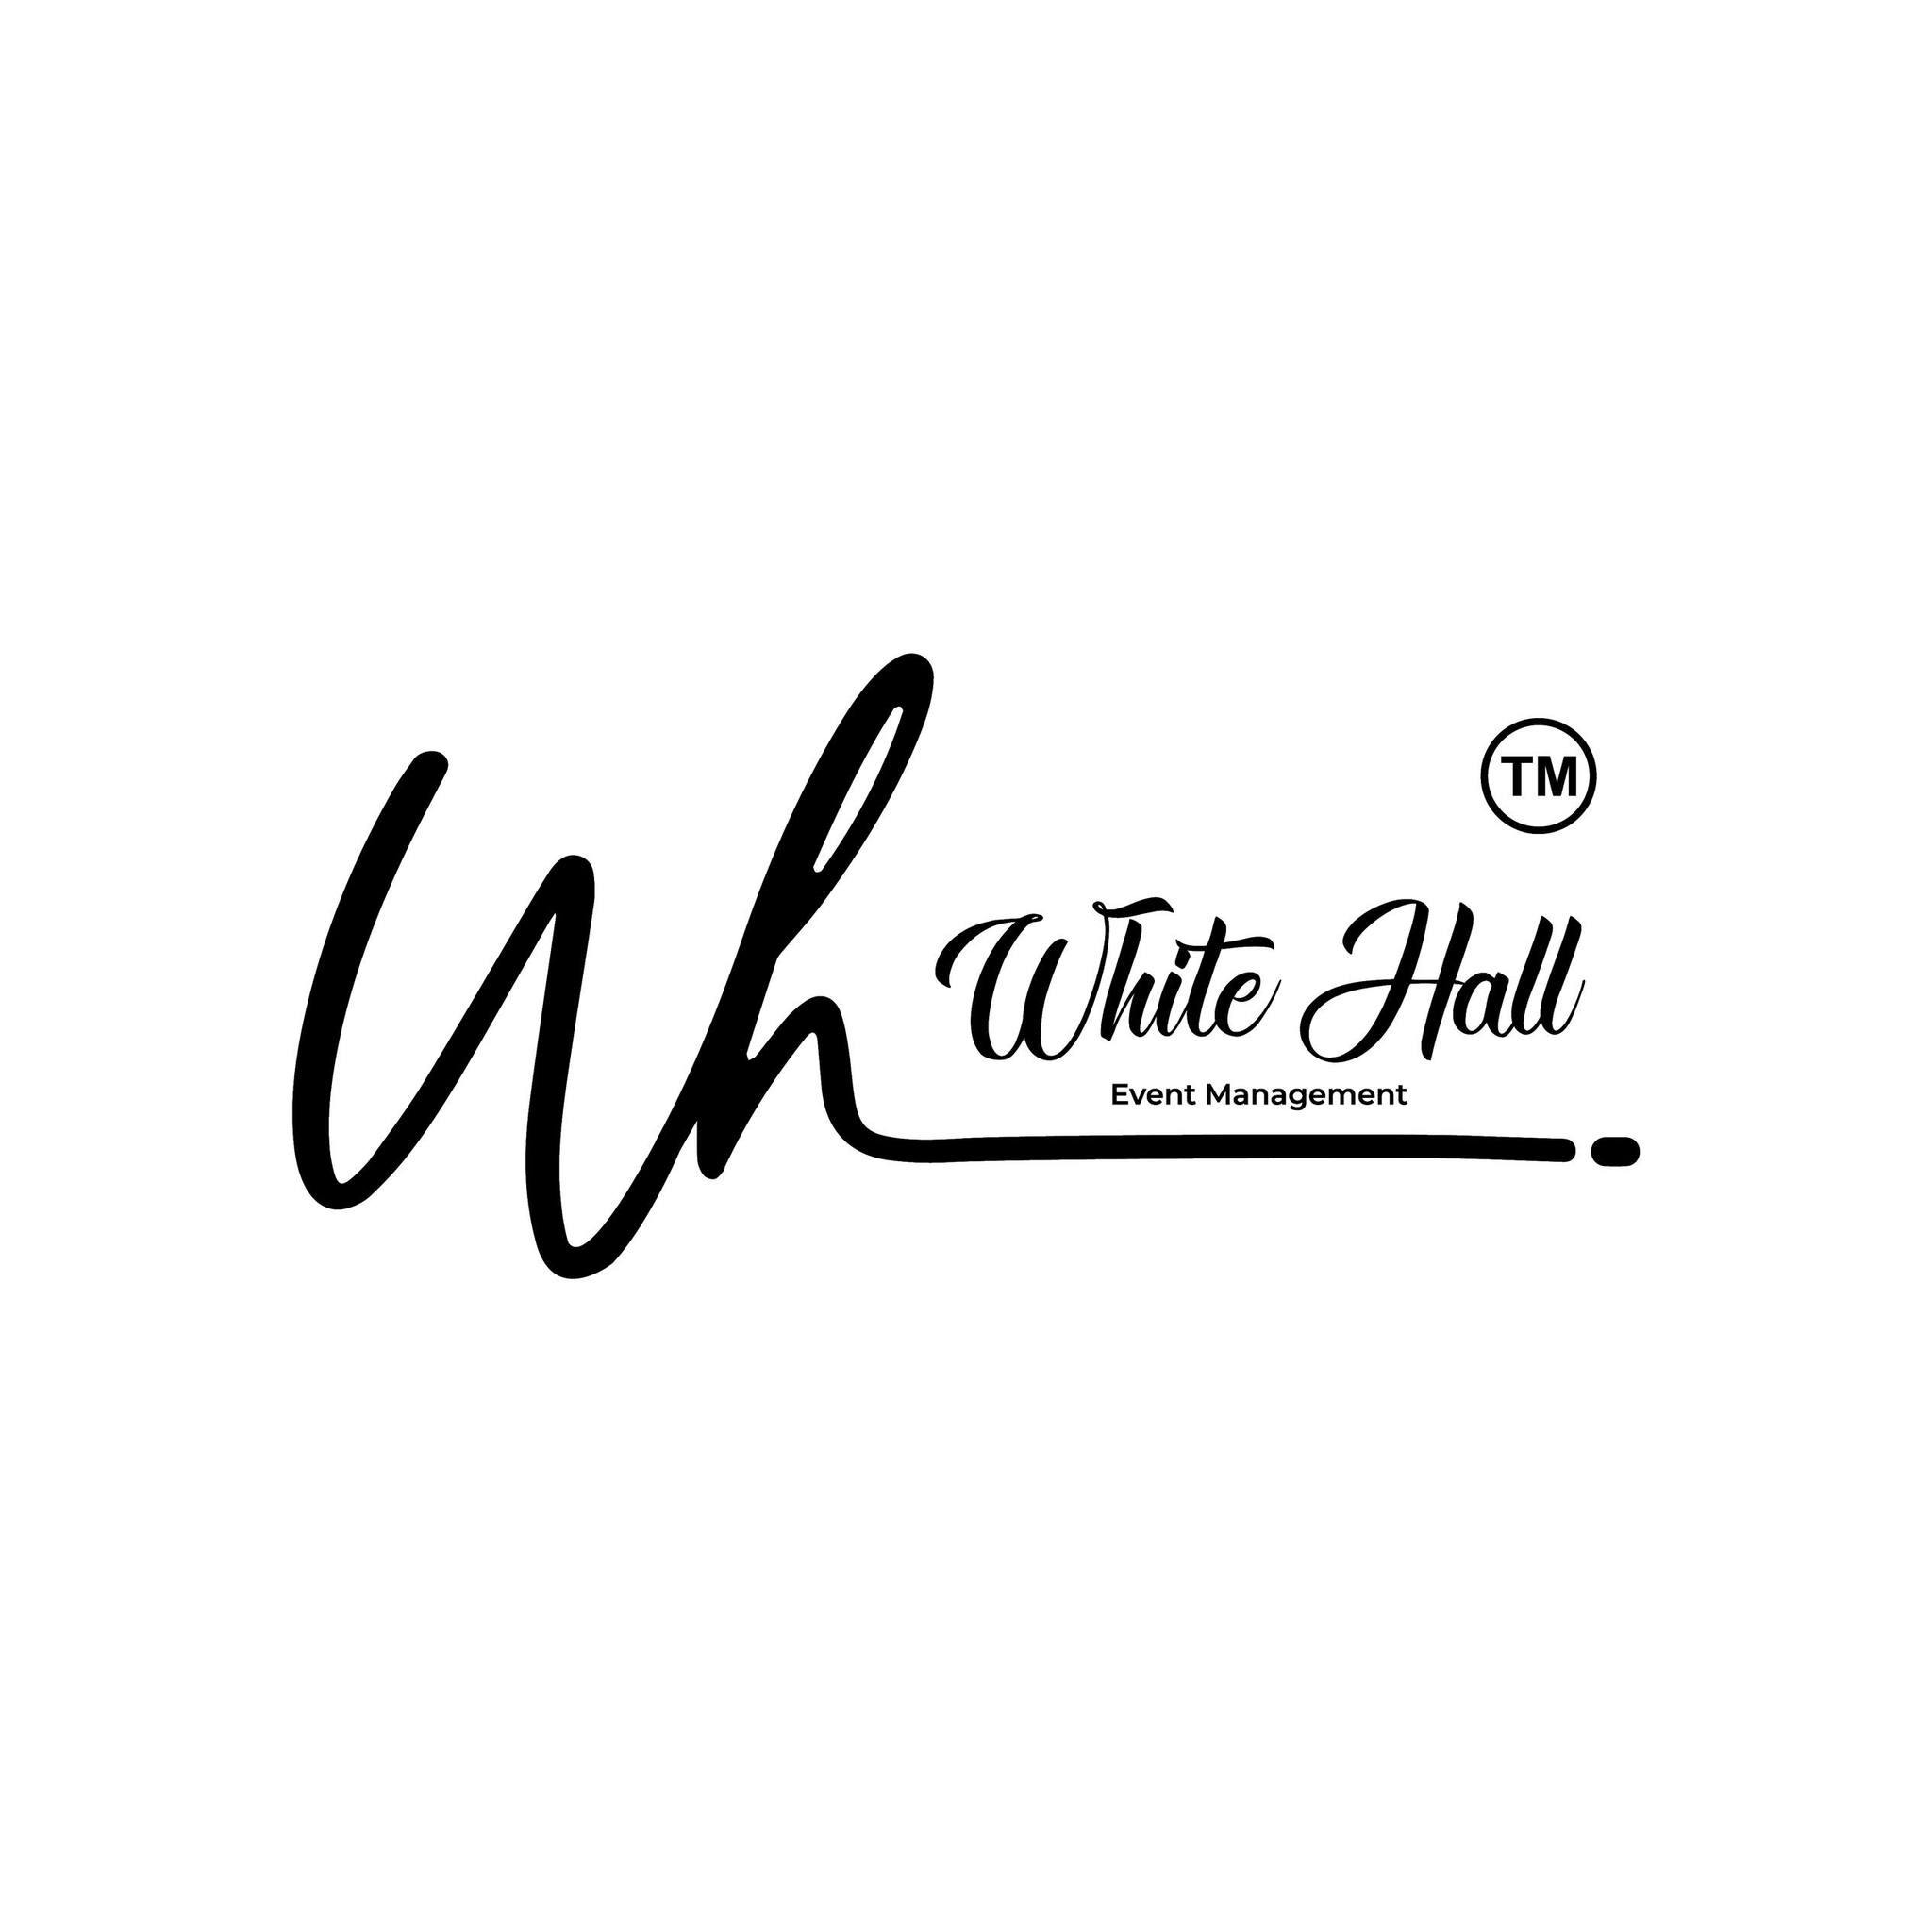 White Hall Event Management logo